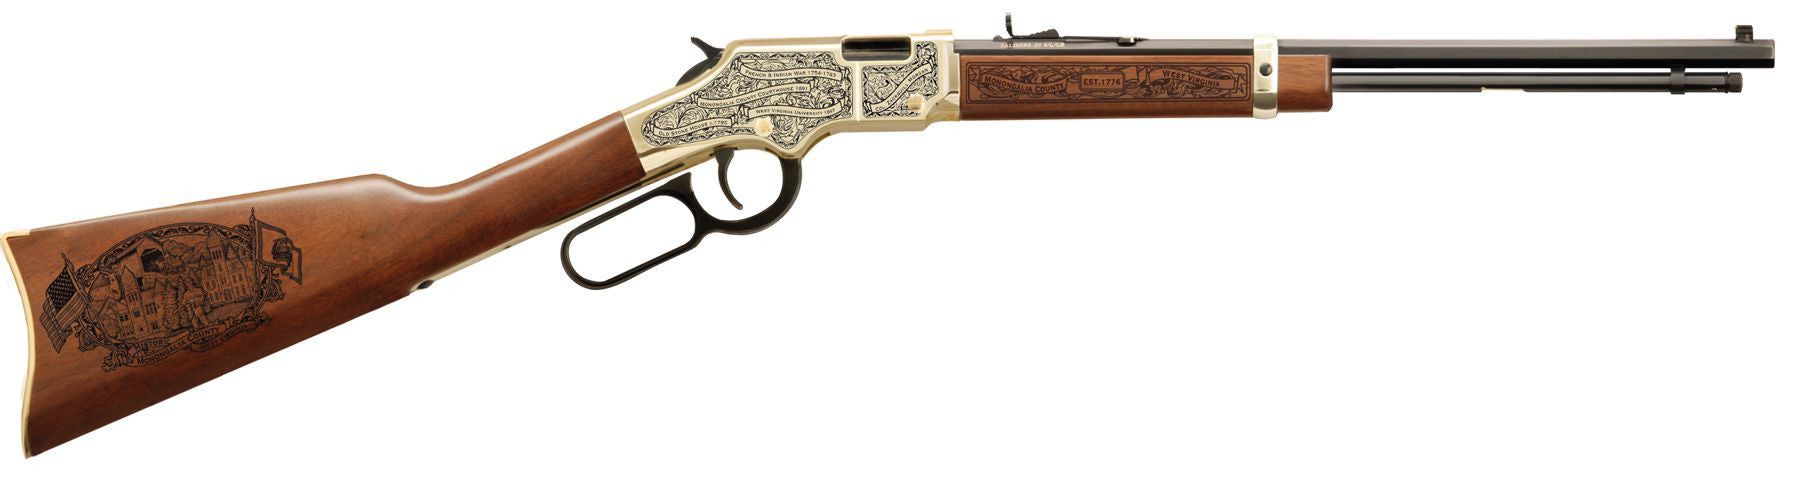 monongalia county west virginia engraved rifle h004